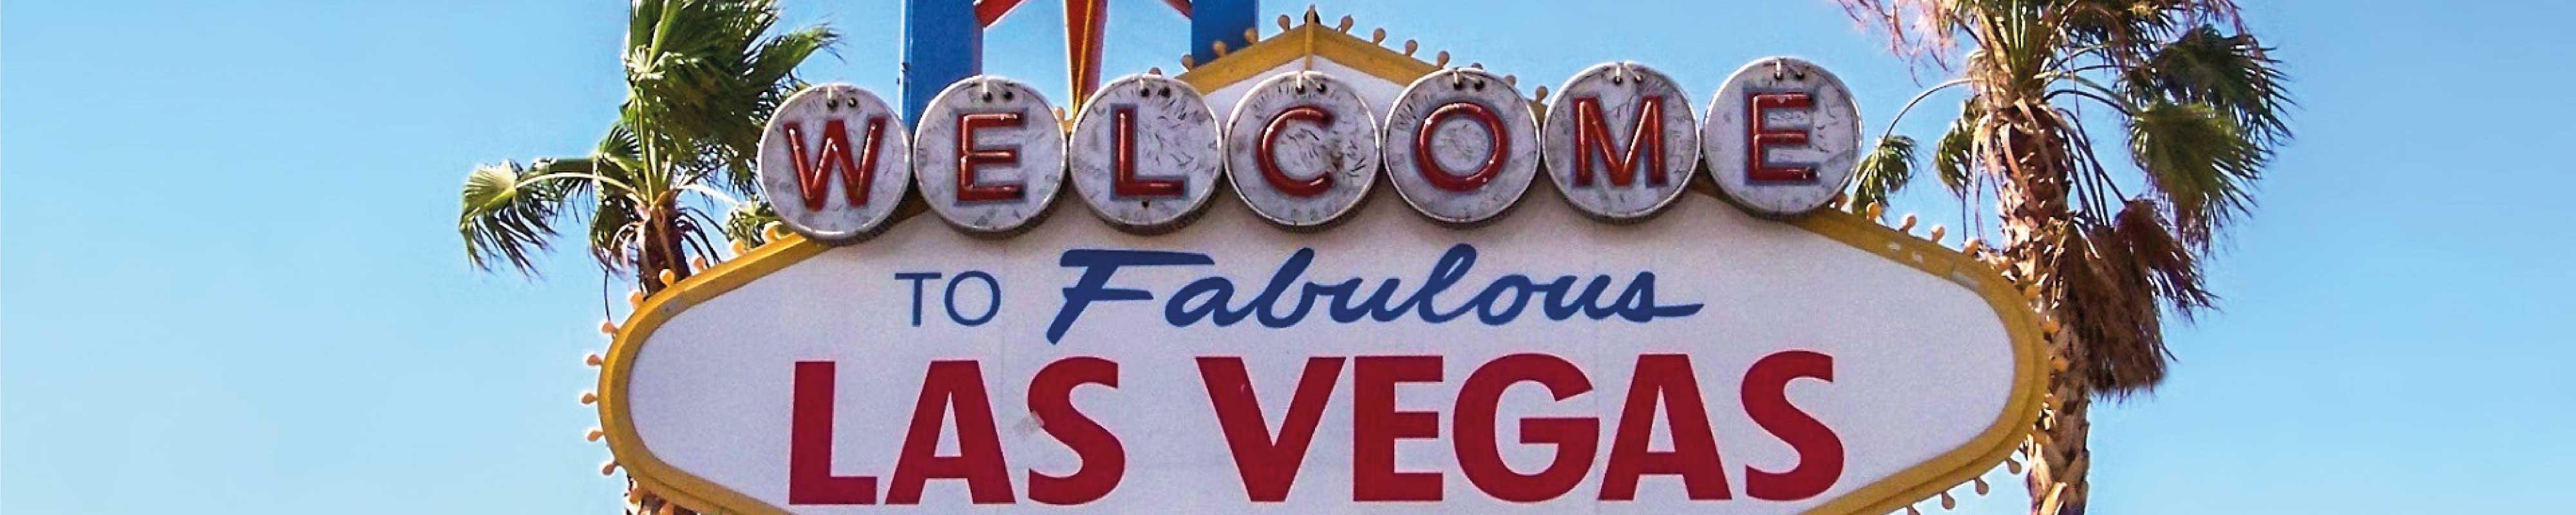 Depósito de Bagagem | Las Vegas - Nannybag